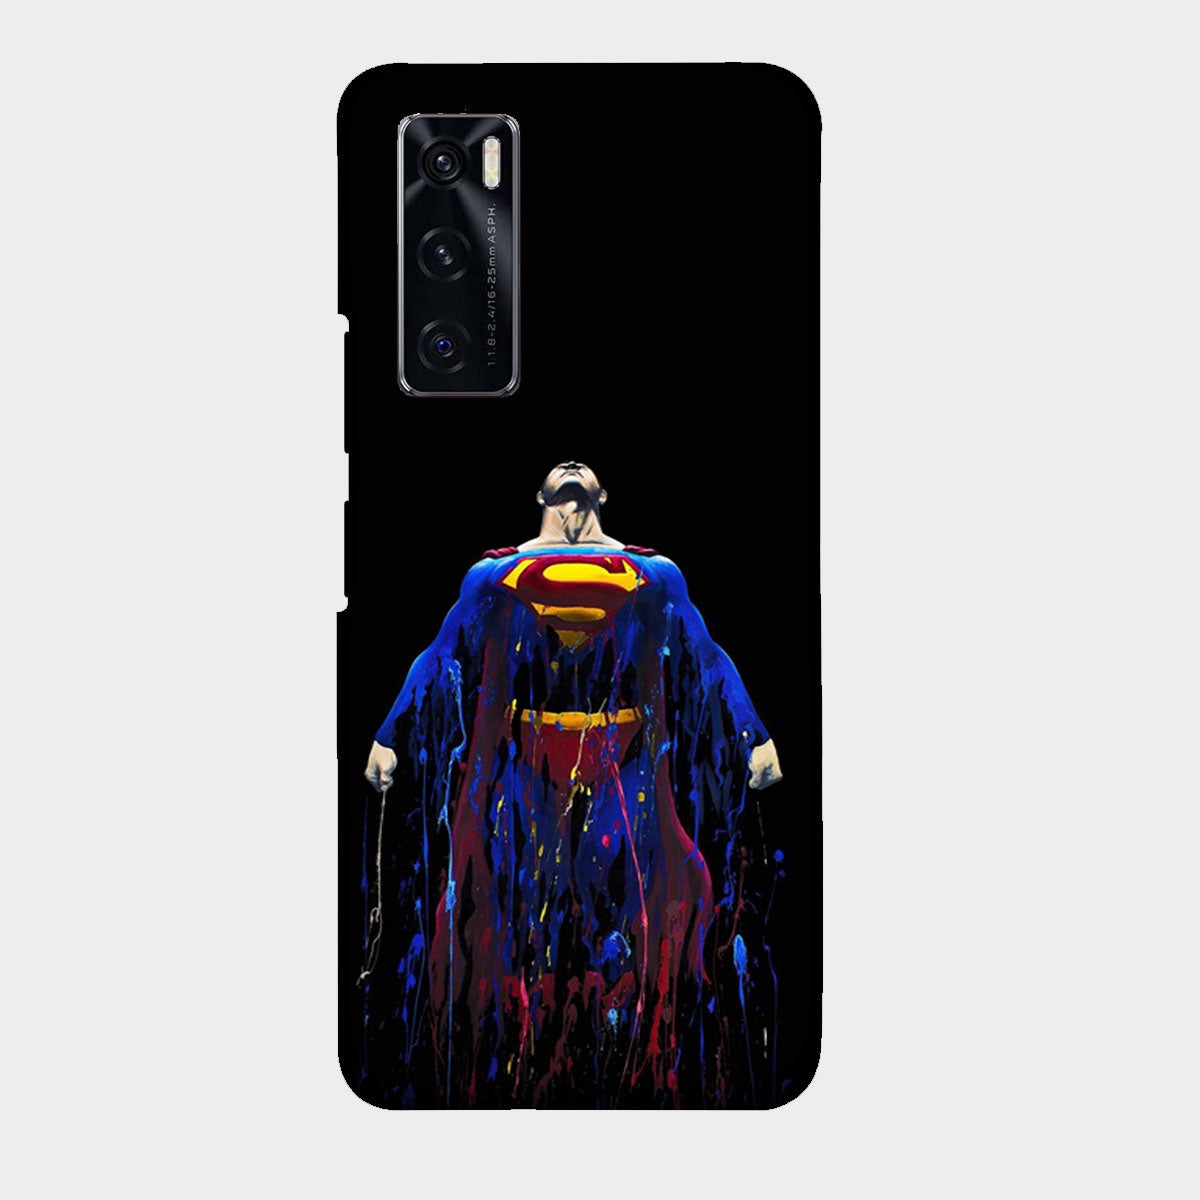 Superman Rises - Mobile Phone Cover - Hard Case - Vivo